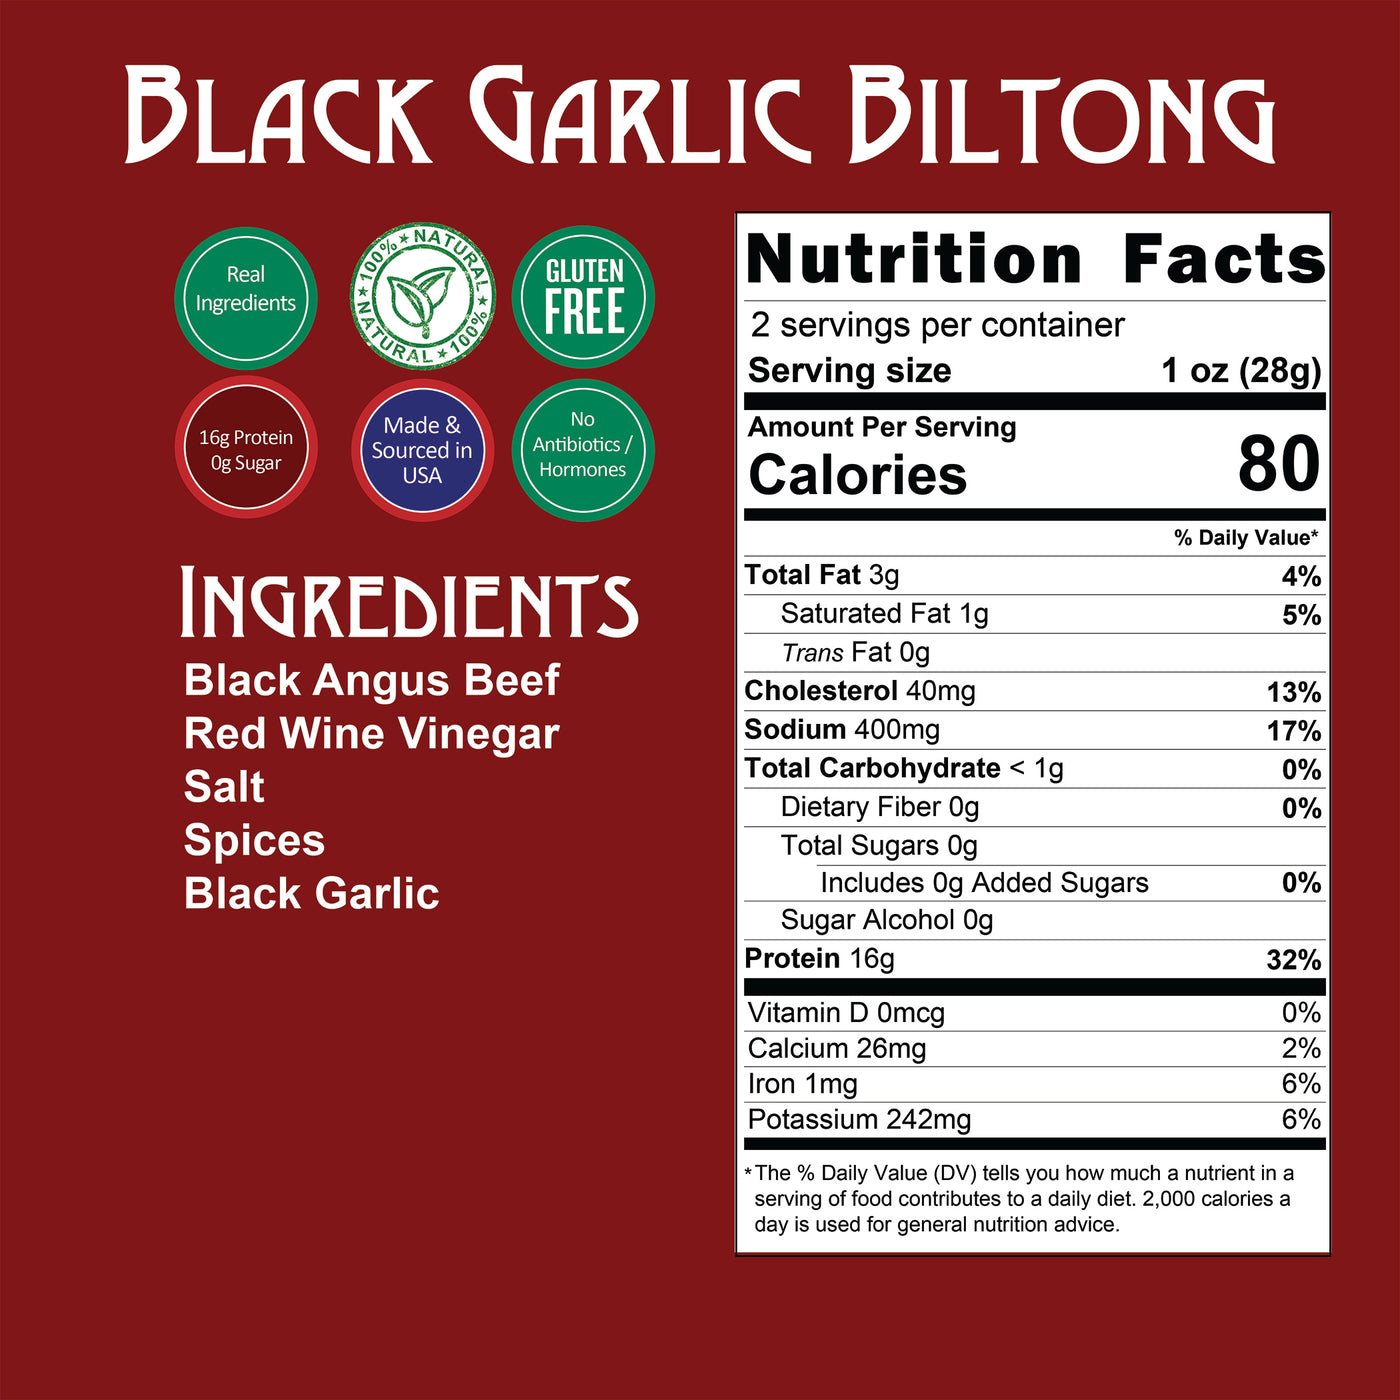 R&D - Black Garlic Biltong